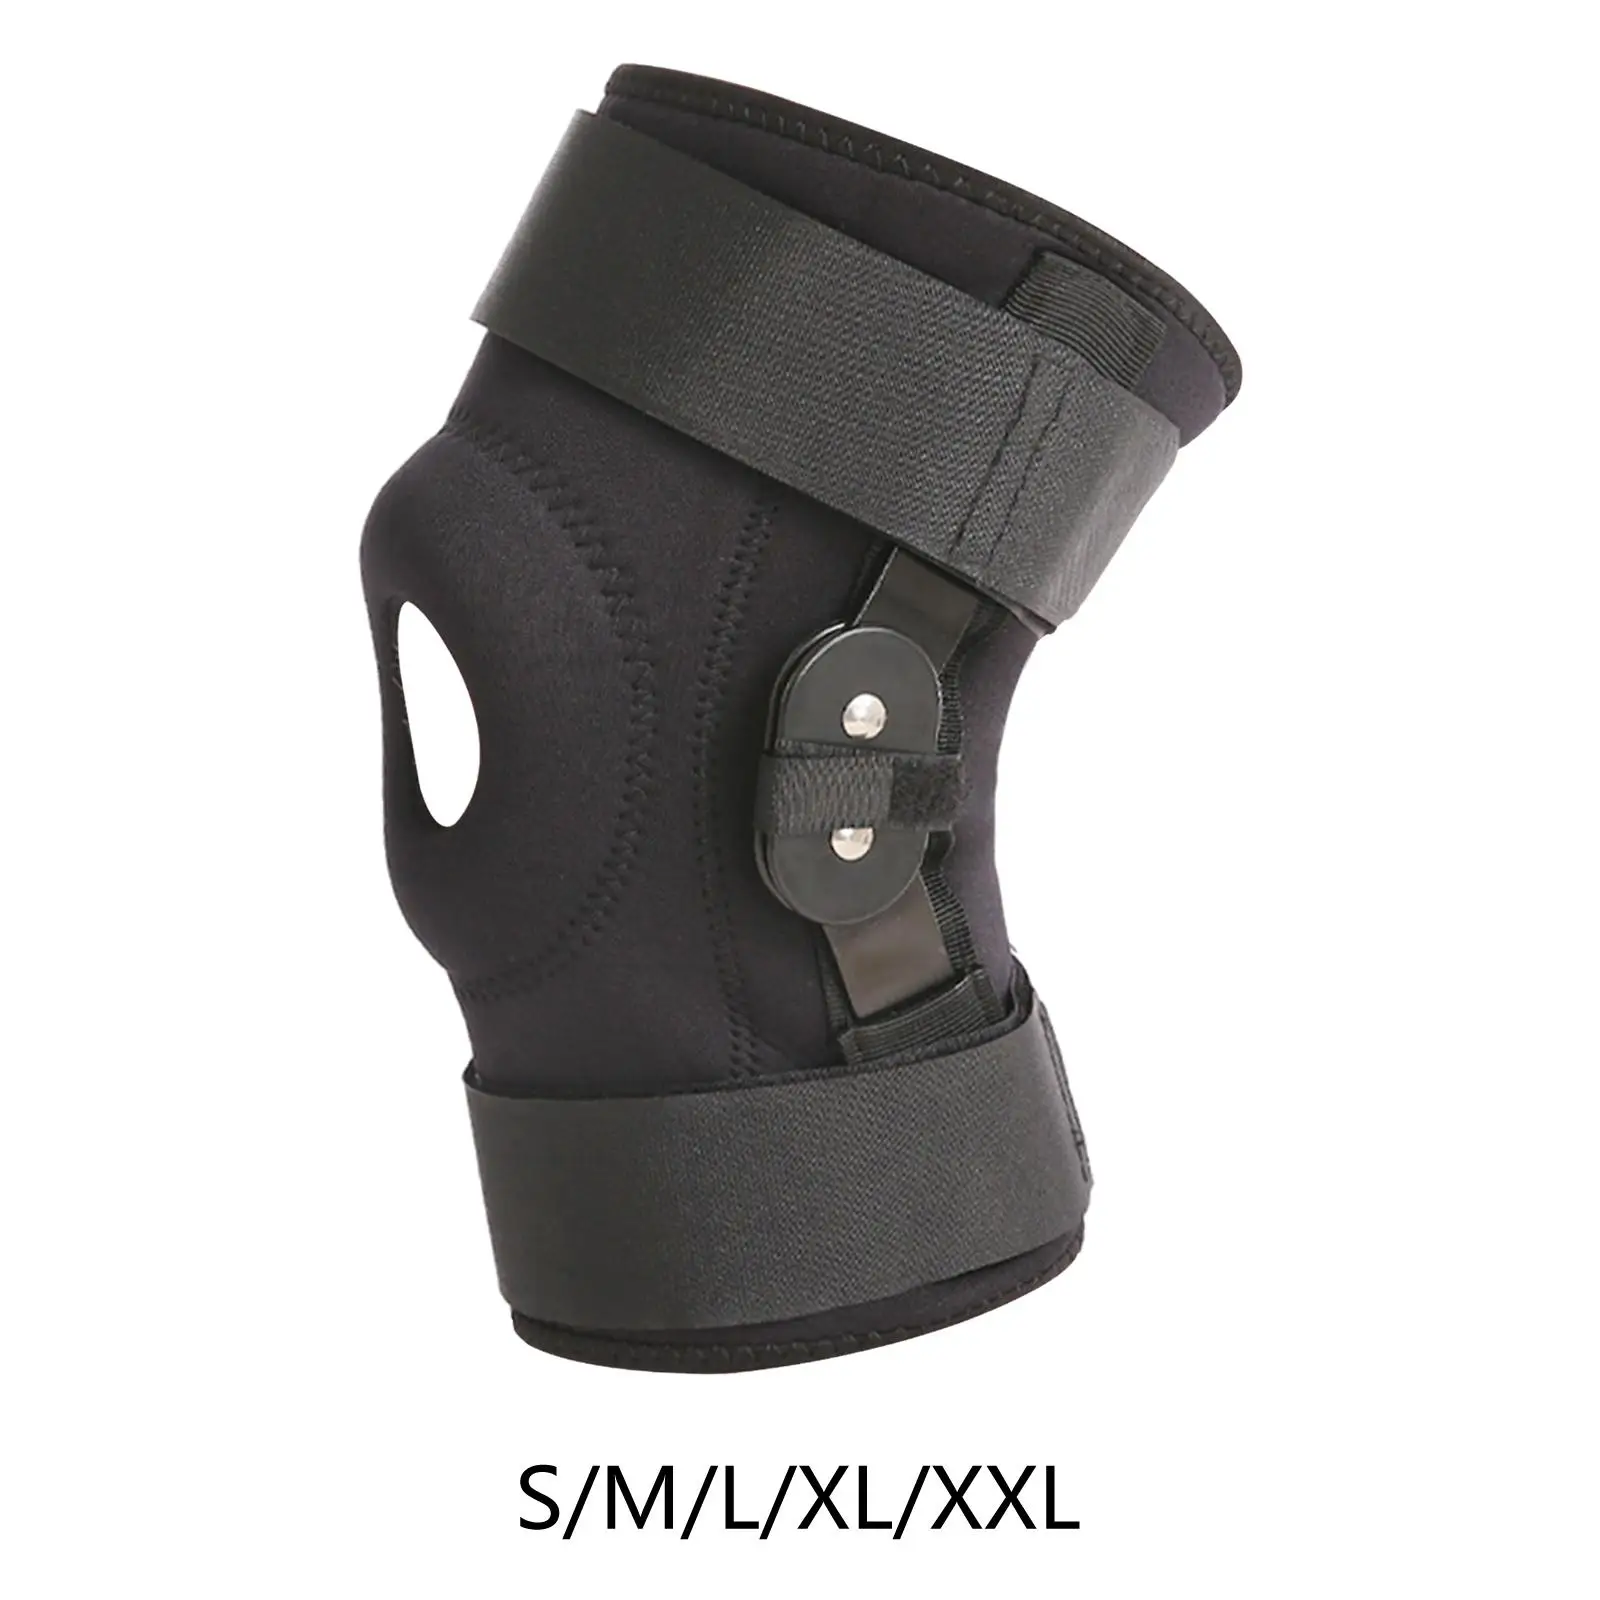 1Pc Knee Booster Brace, Stabilizer Kneepad , Adjustable for Knee